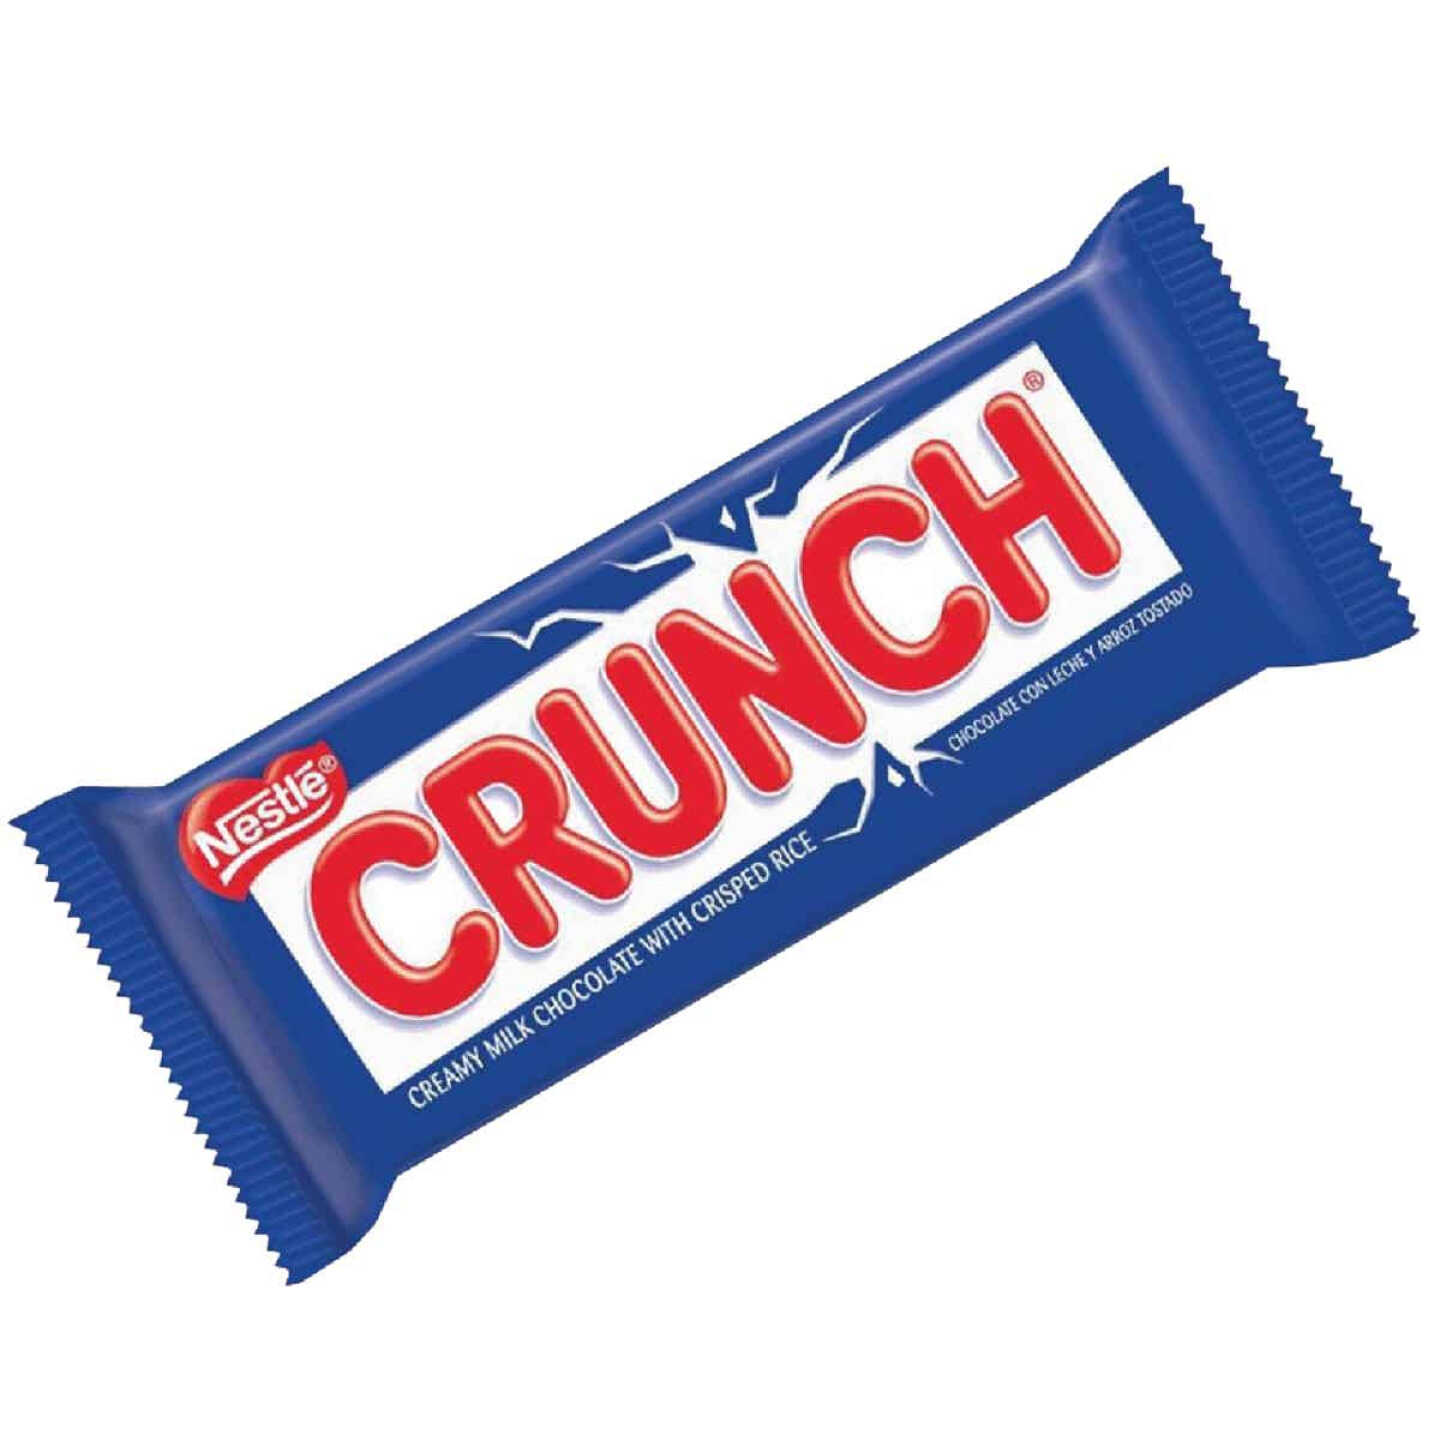 Nestle Crunch 1.55 Oz. Crispy Milk Chocolate Candy Bar - Anderson Lumber